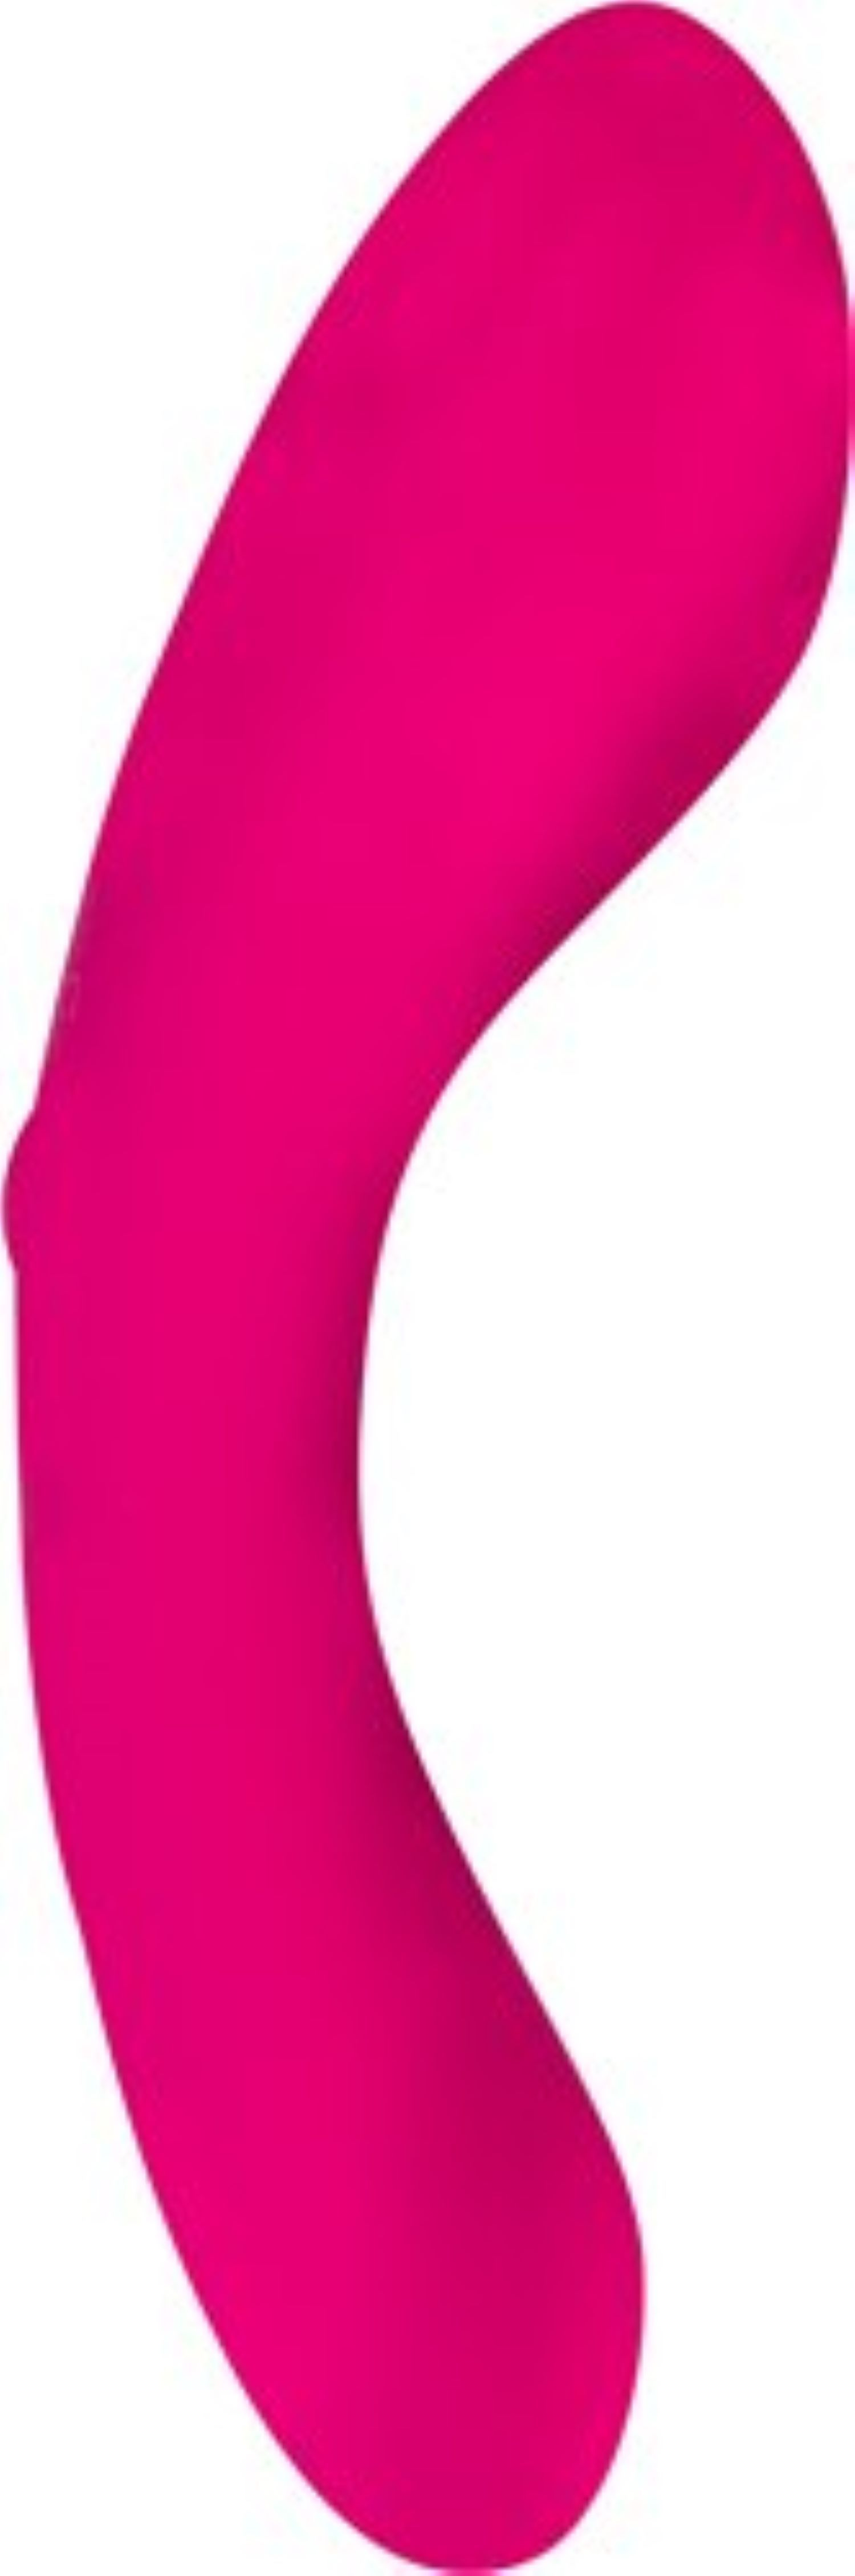 Roze Swan - g-punkt-vibratoren Vibrator SWAN Wand VIBES